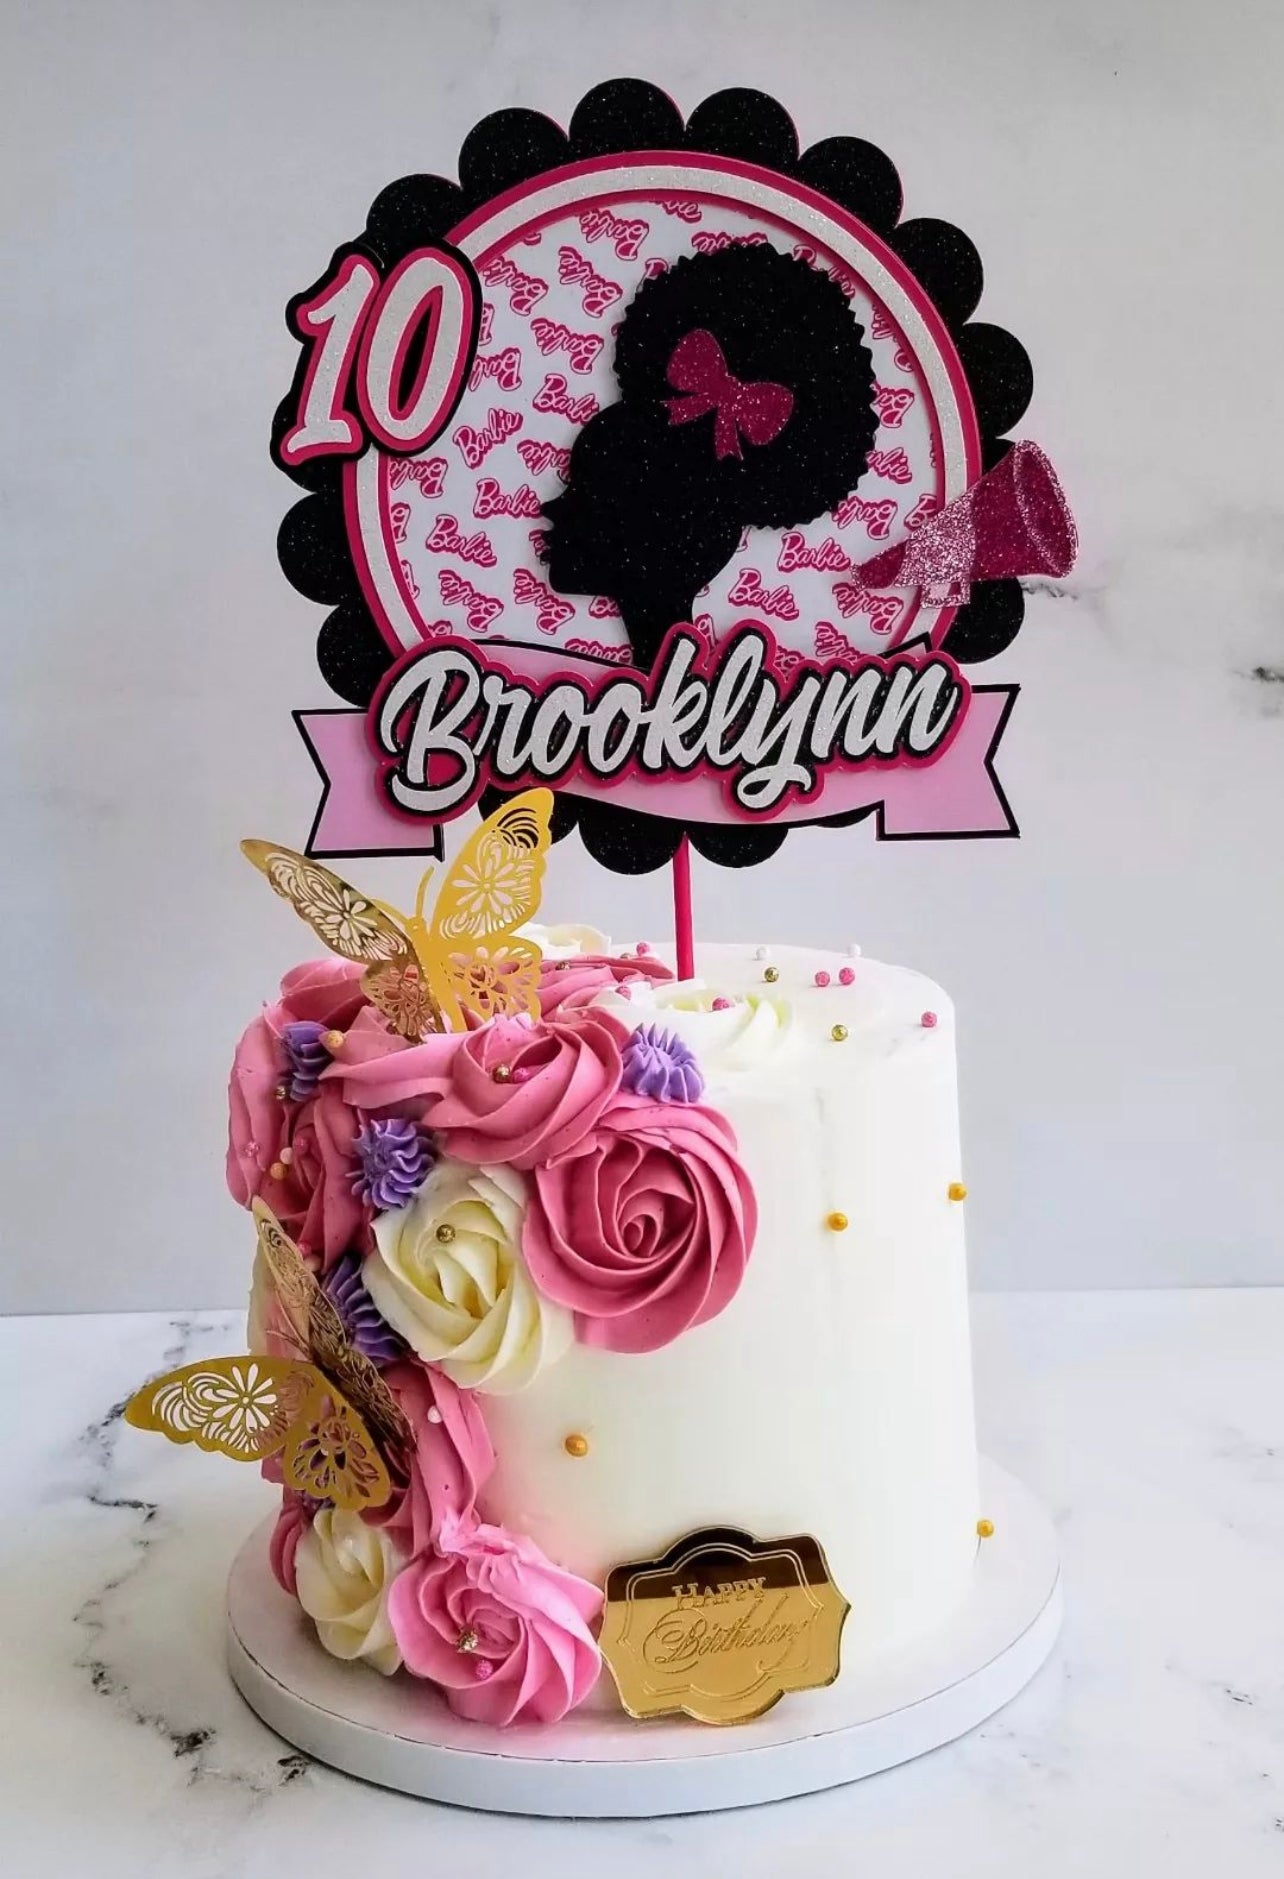 barbie silhouette cake